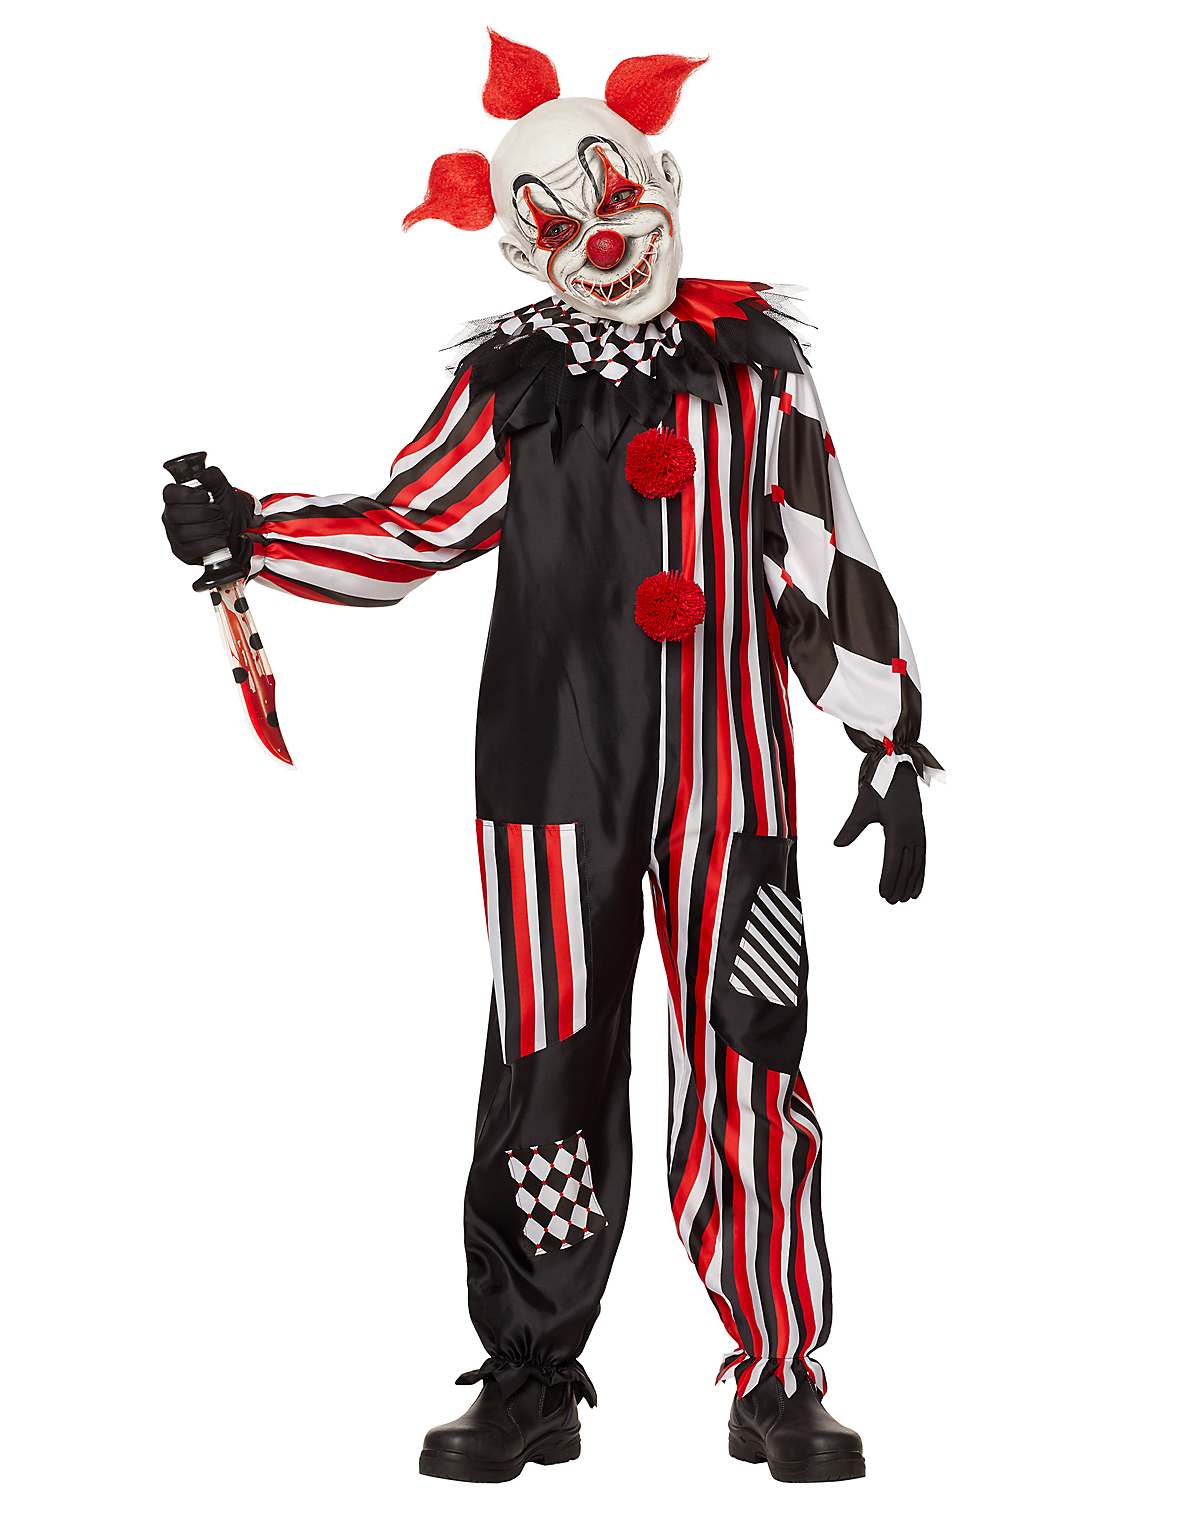 Kids krazy clown costume